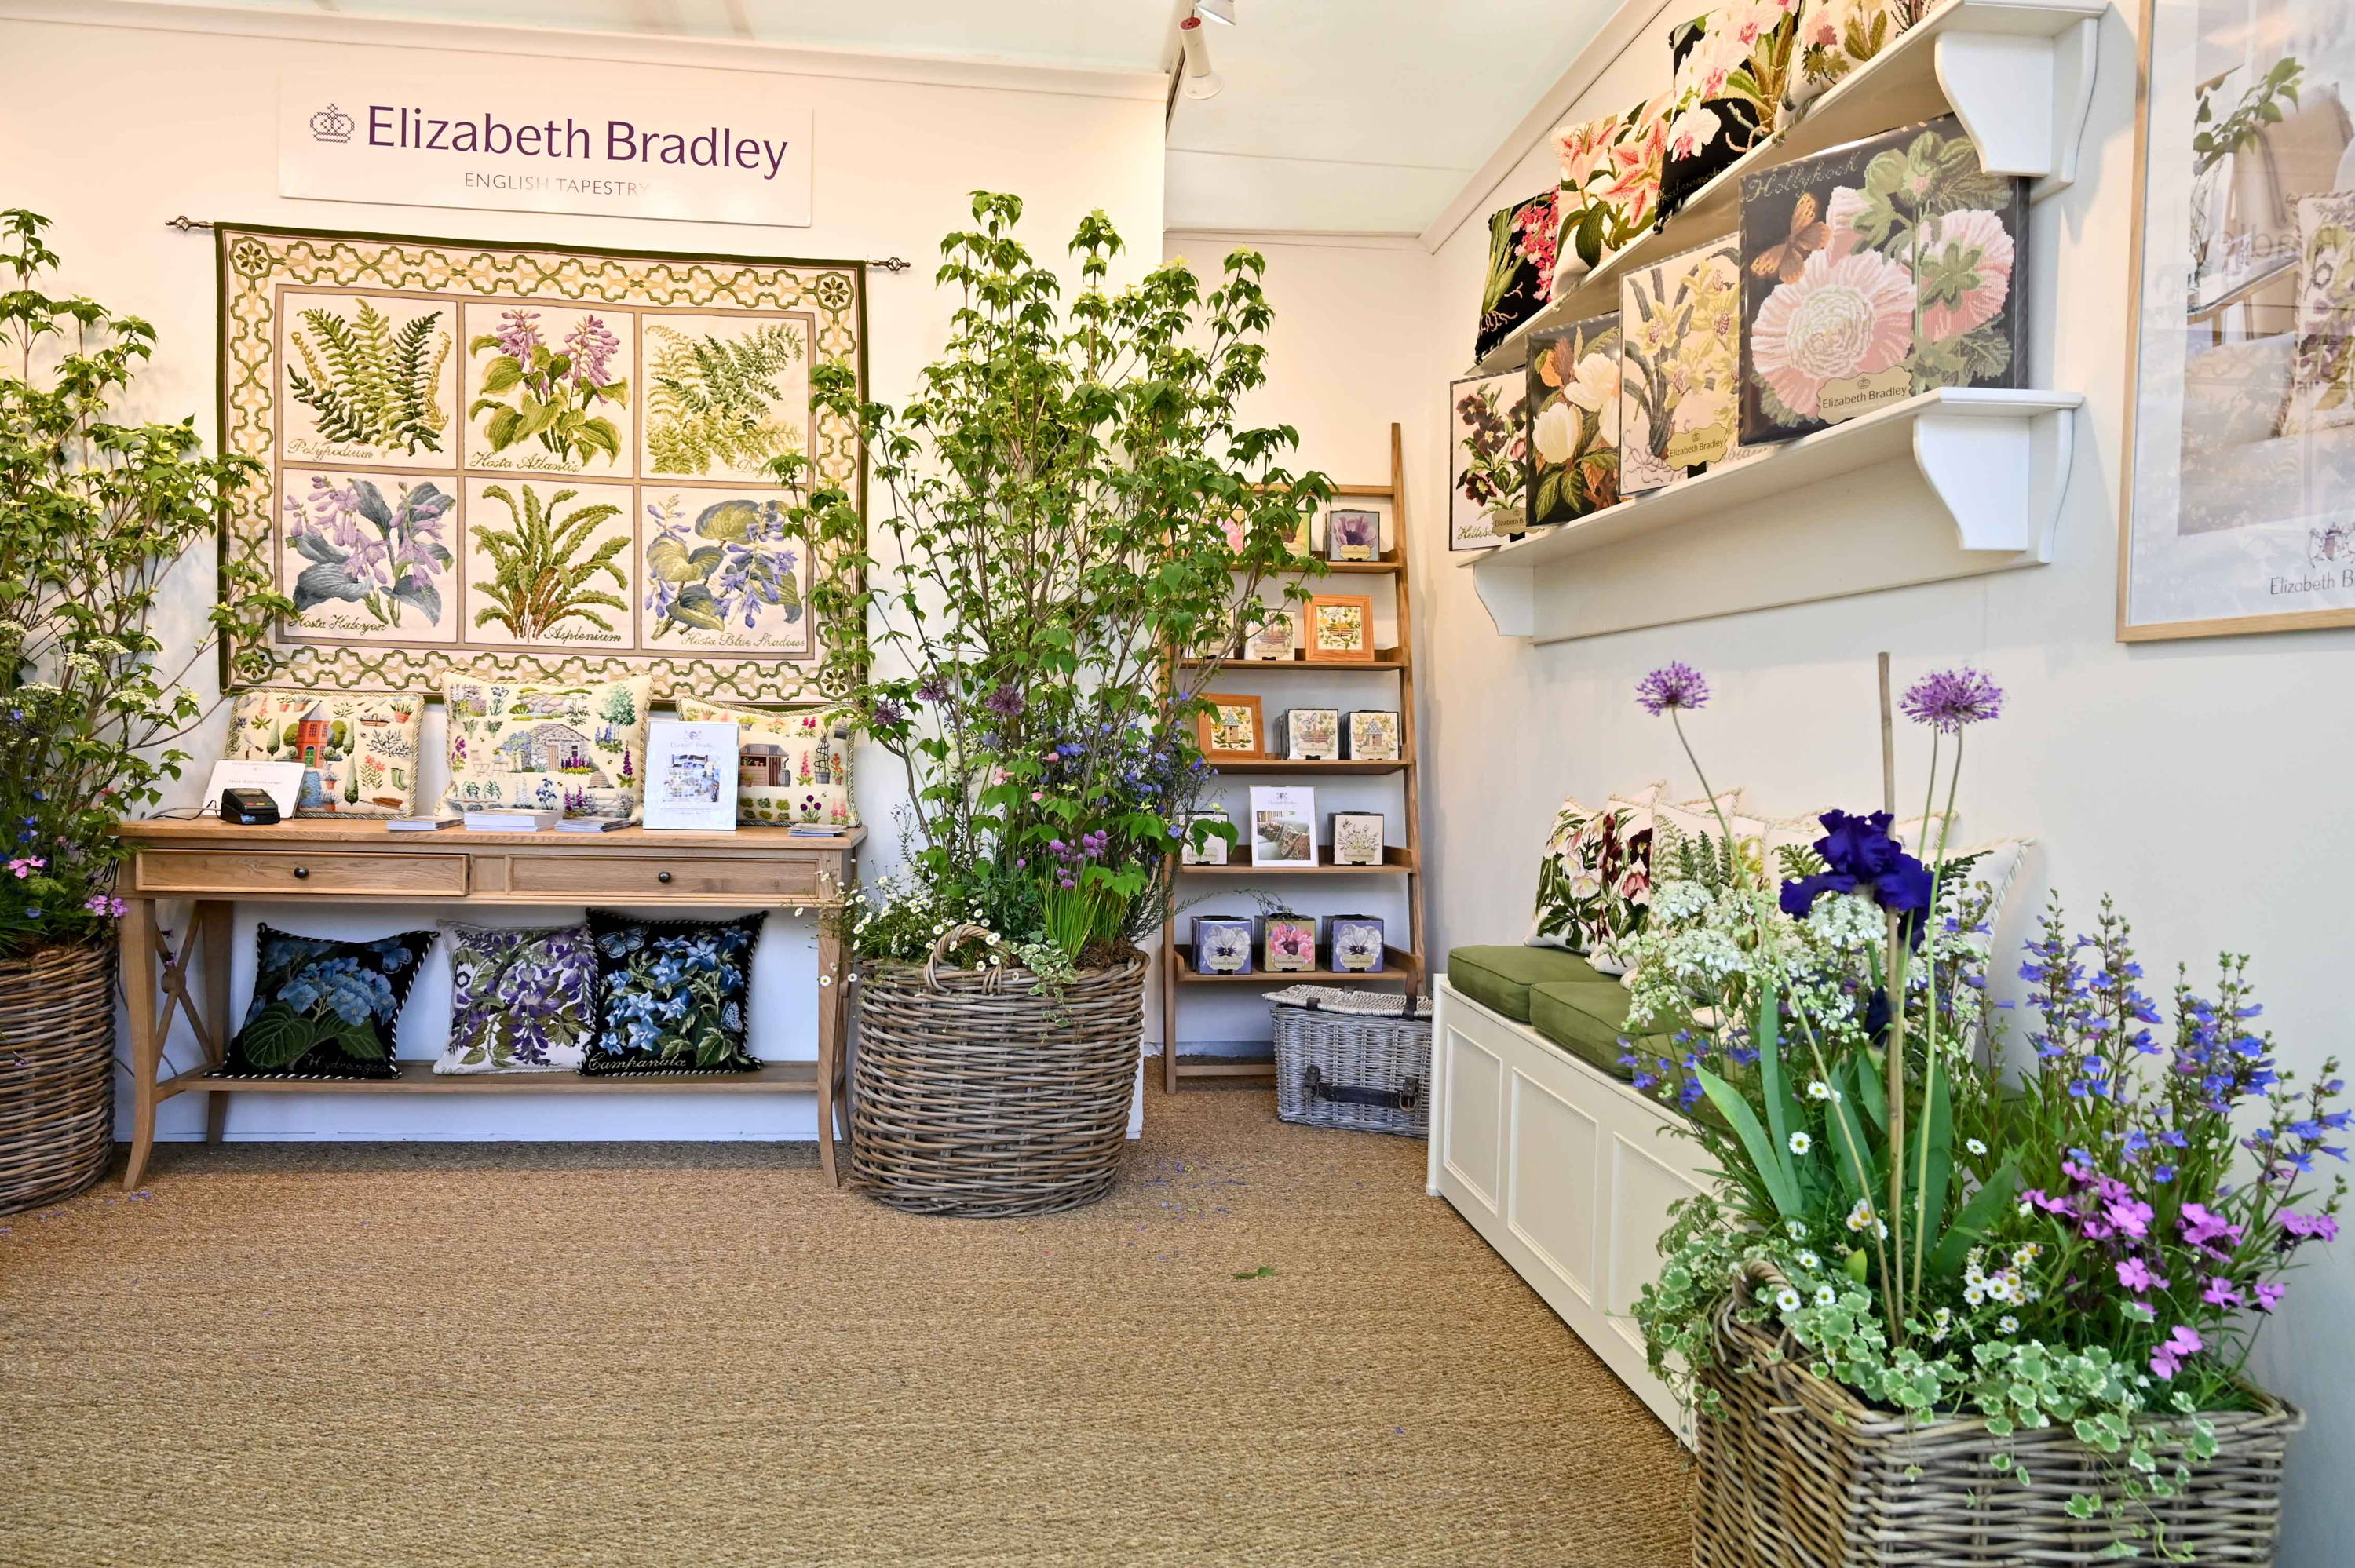 Elizabeth Bradley's 2019 Chelsea Flower Show booth